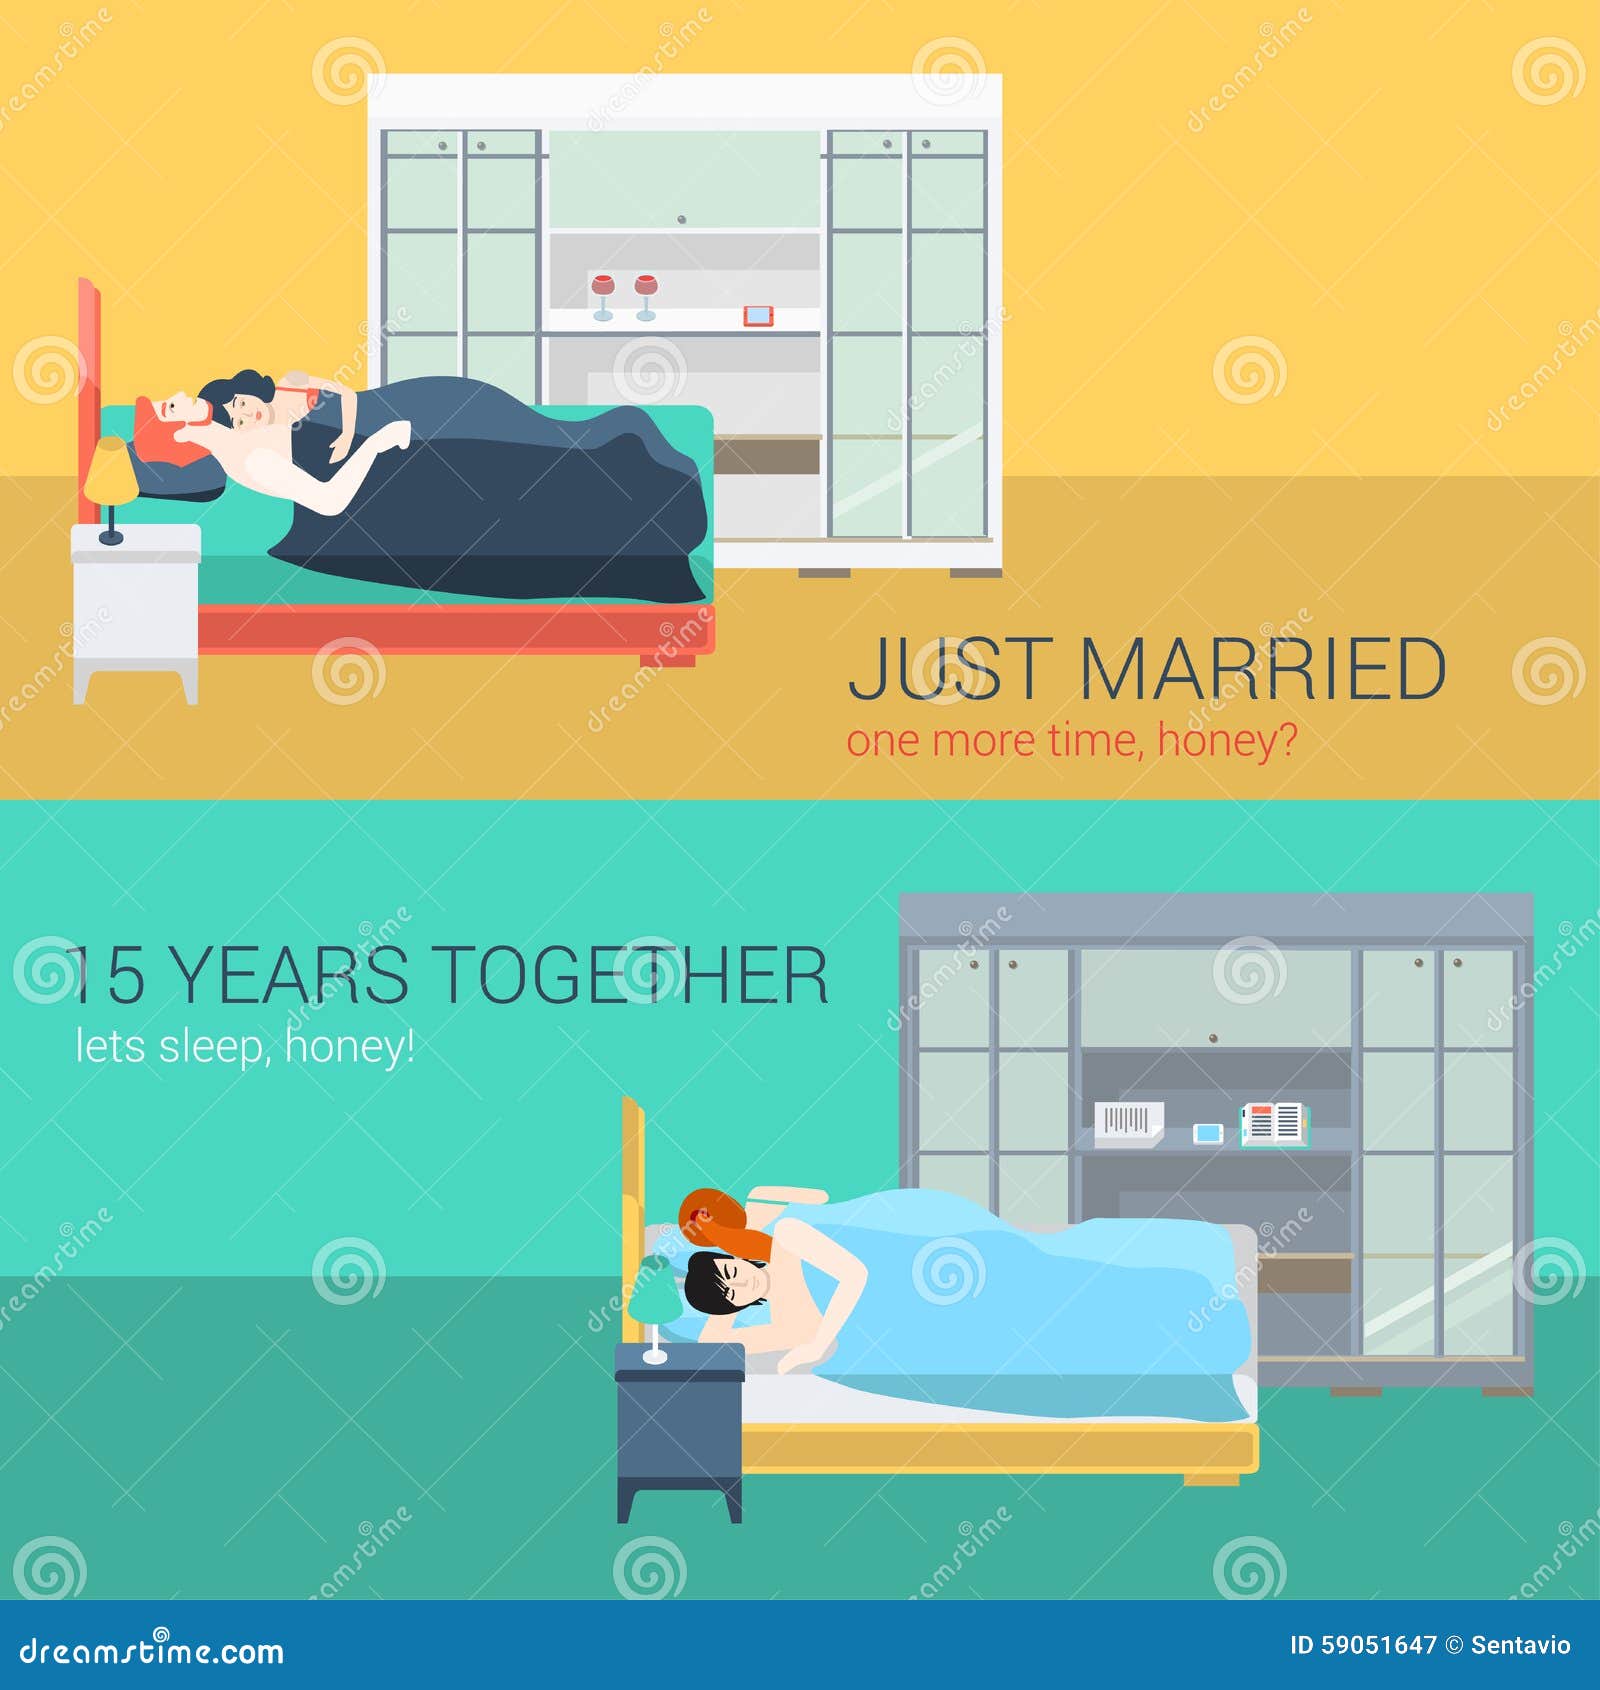 Flat Style Vector Sleeping Embracing Couple in Bedroom Stock Vector